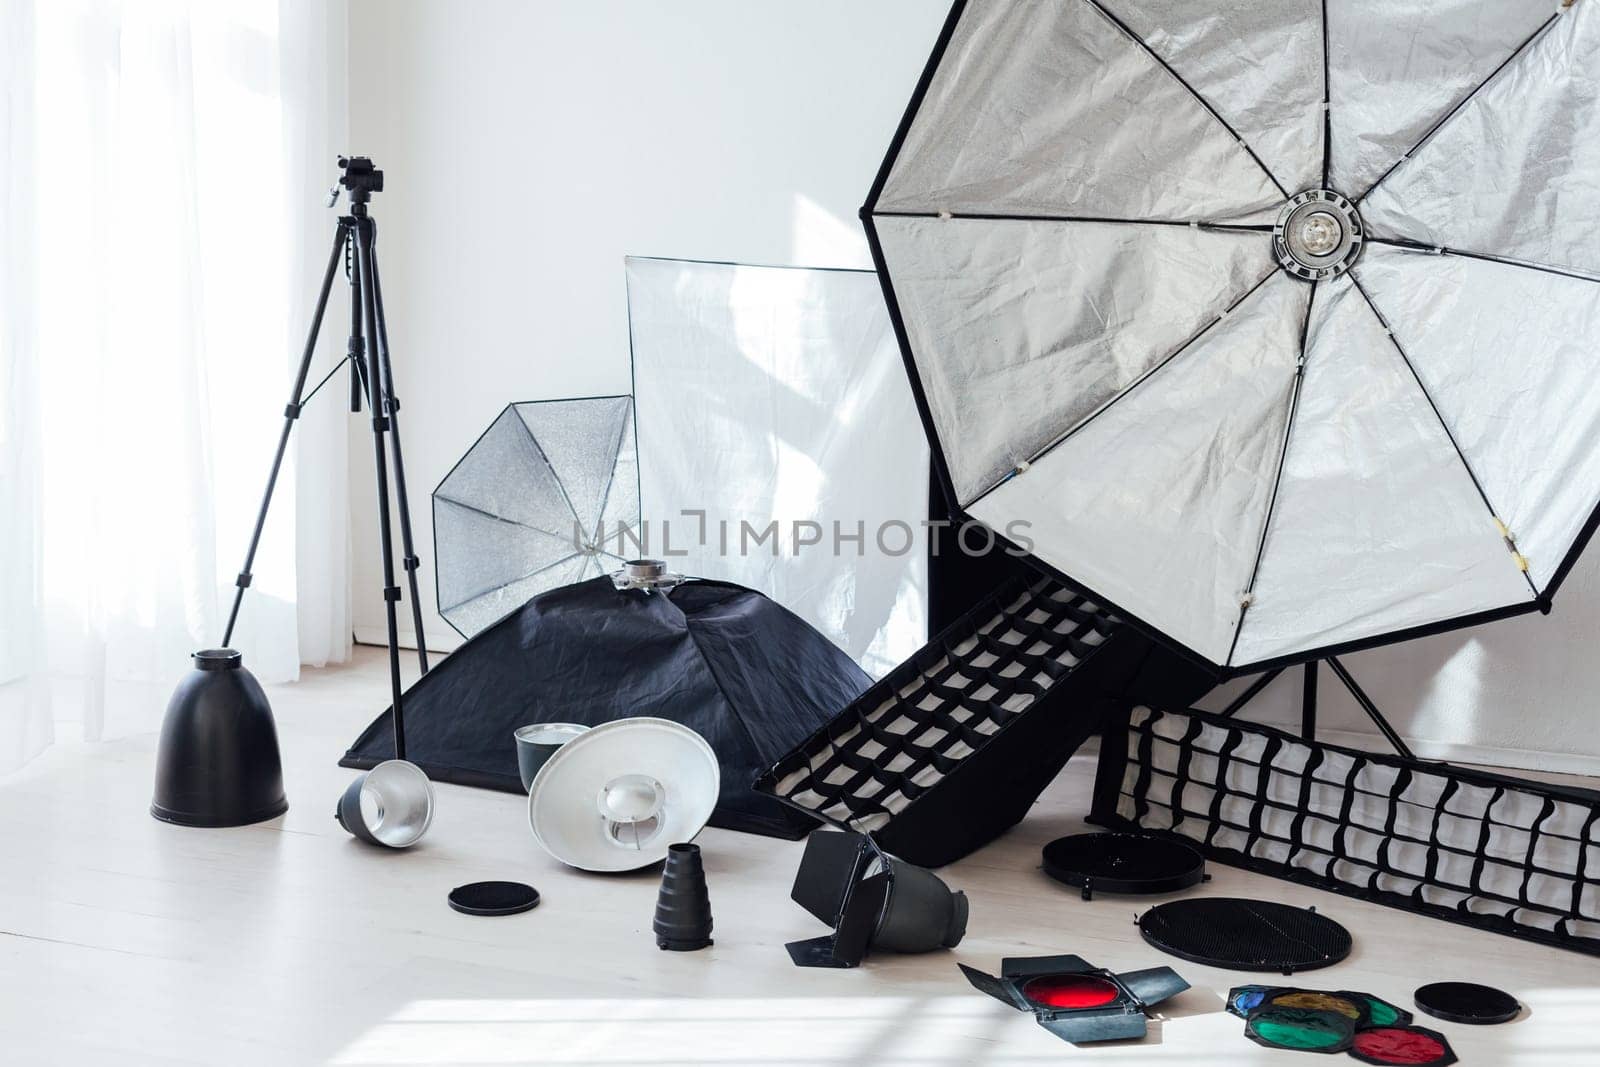 Equipment white photo studio flash accessories photographer by Simakov